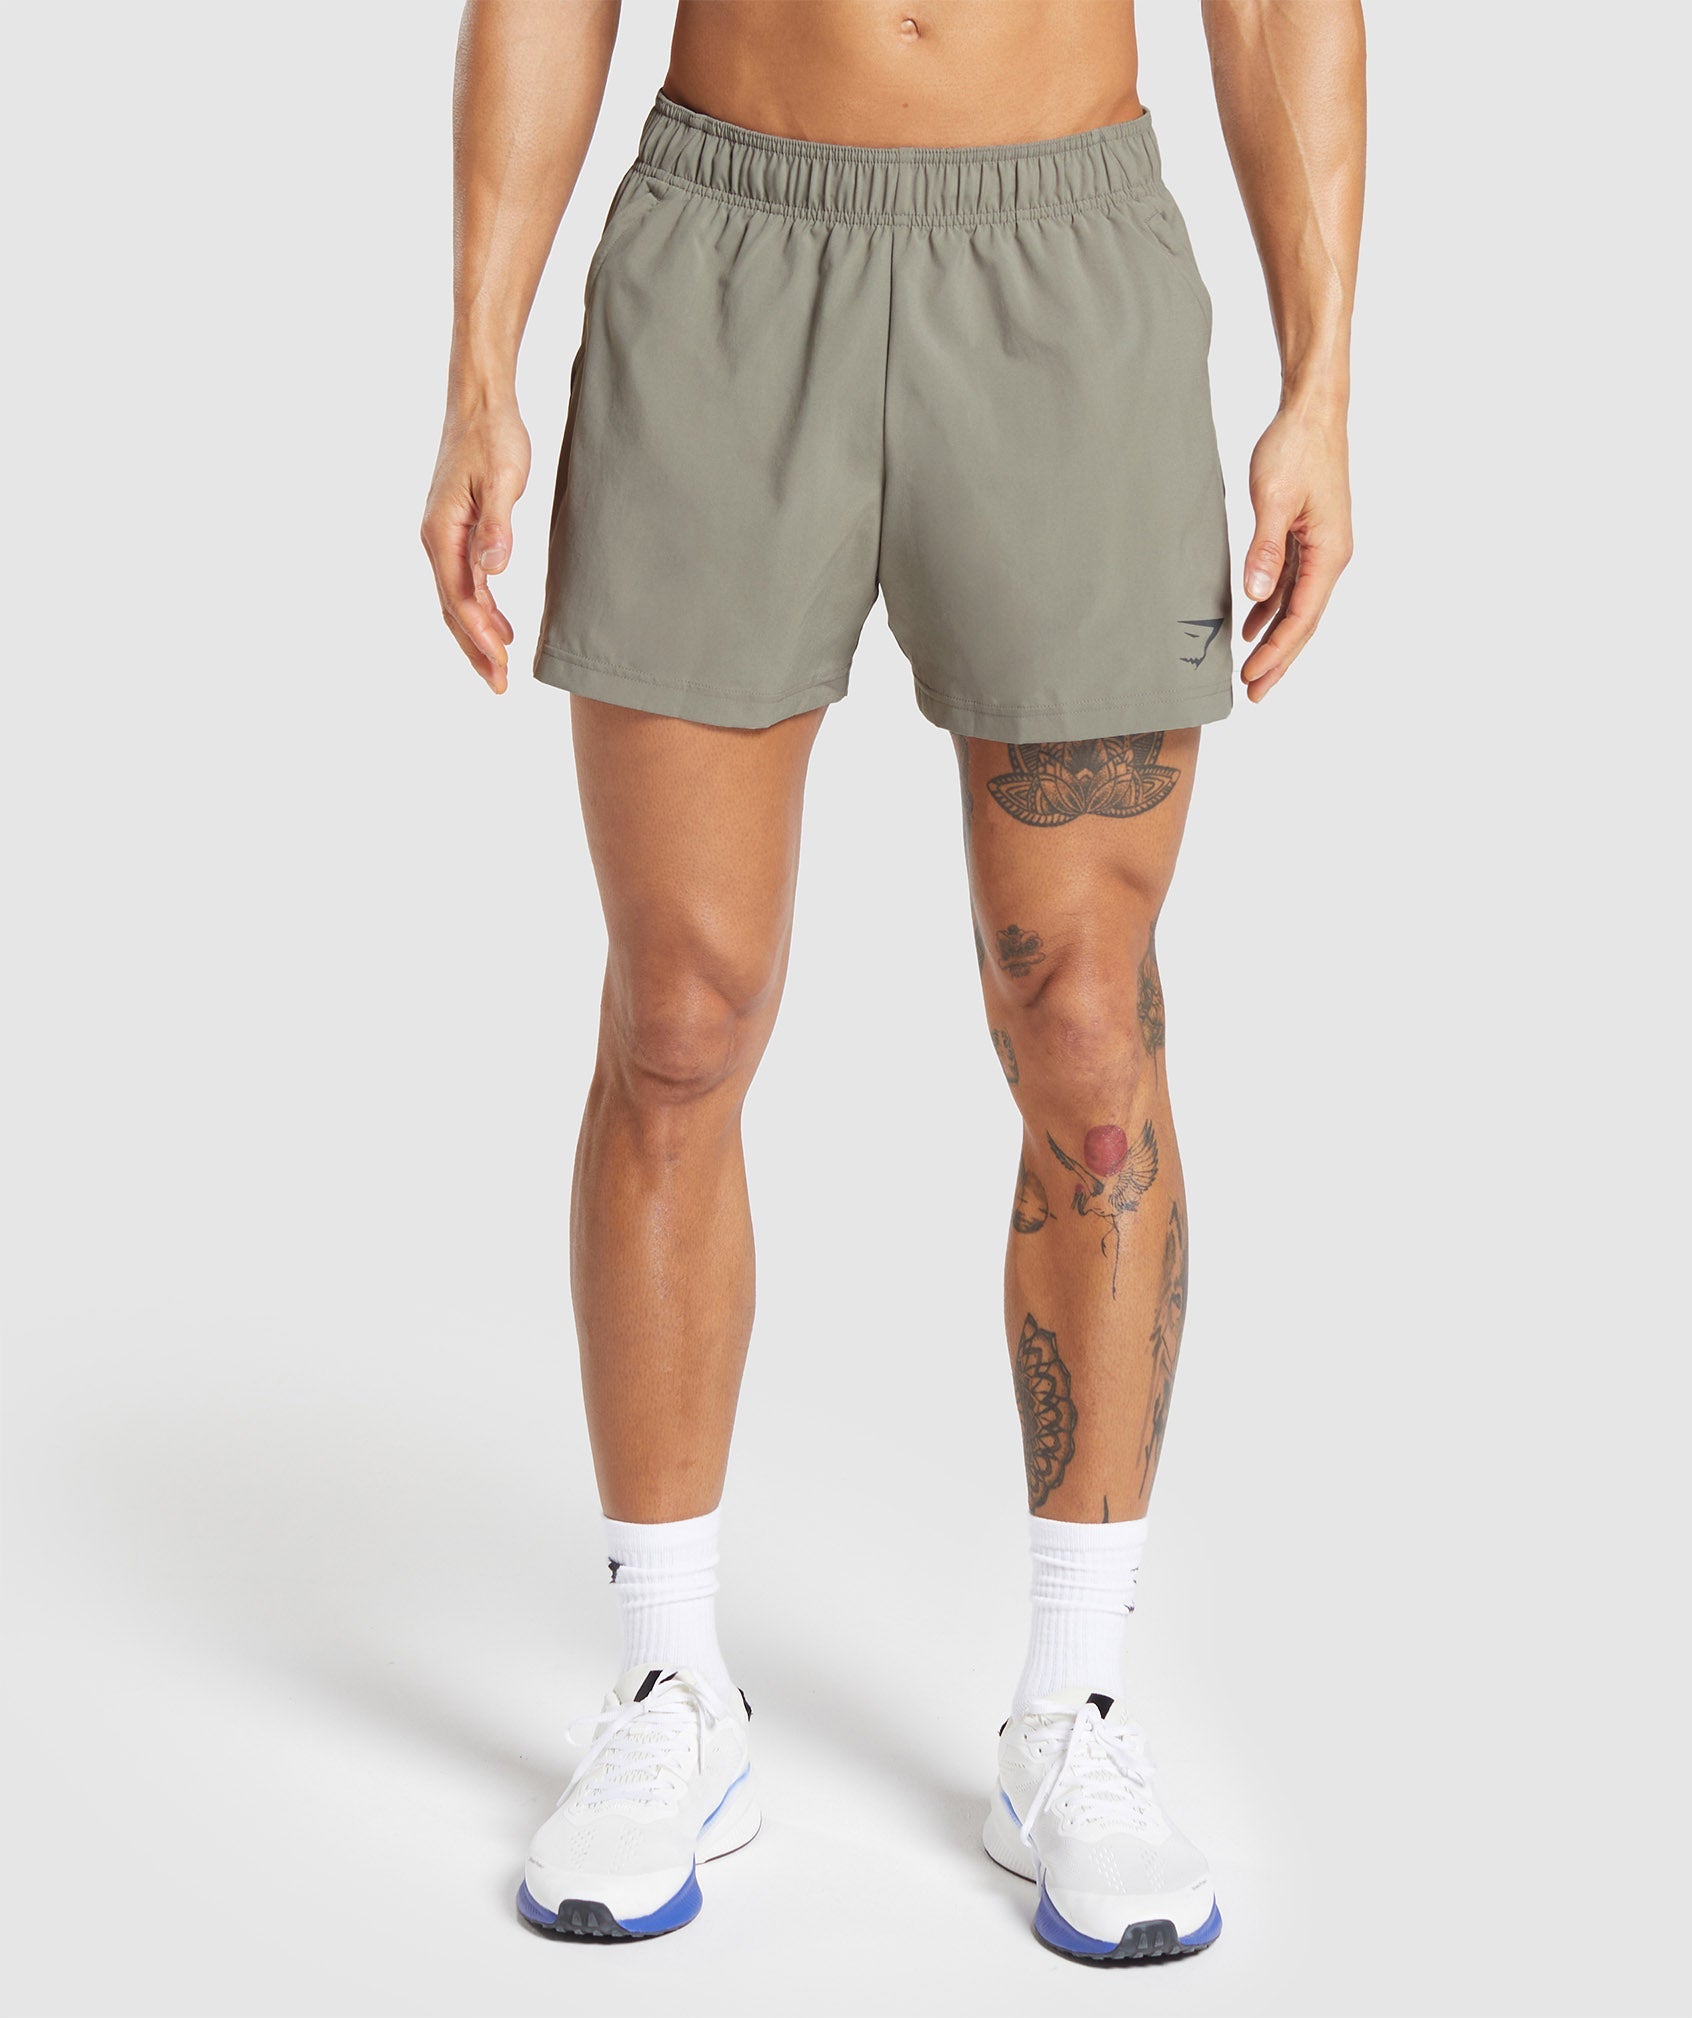 Sport 5" Shorts in Linen Brown/Dark Grey